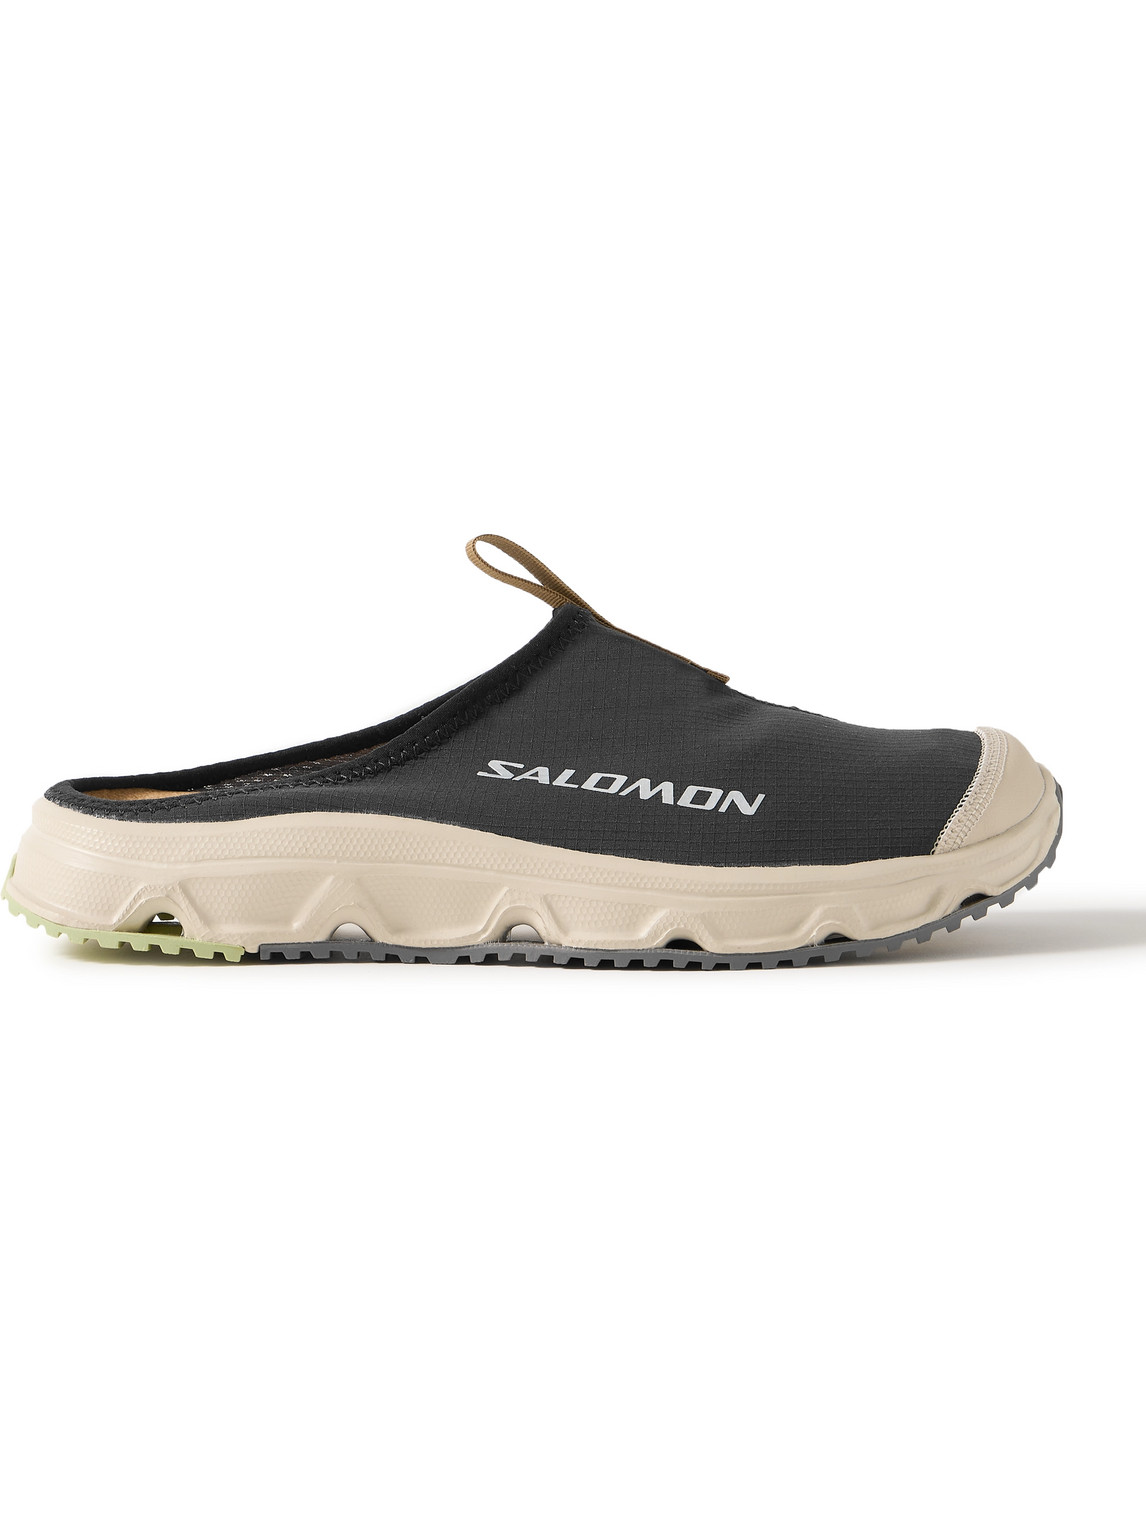 Salomon Rx Slide 3.0 Ripstop And Mesh Slip-on Sneakers In Gray